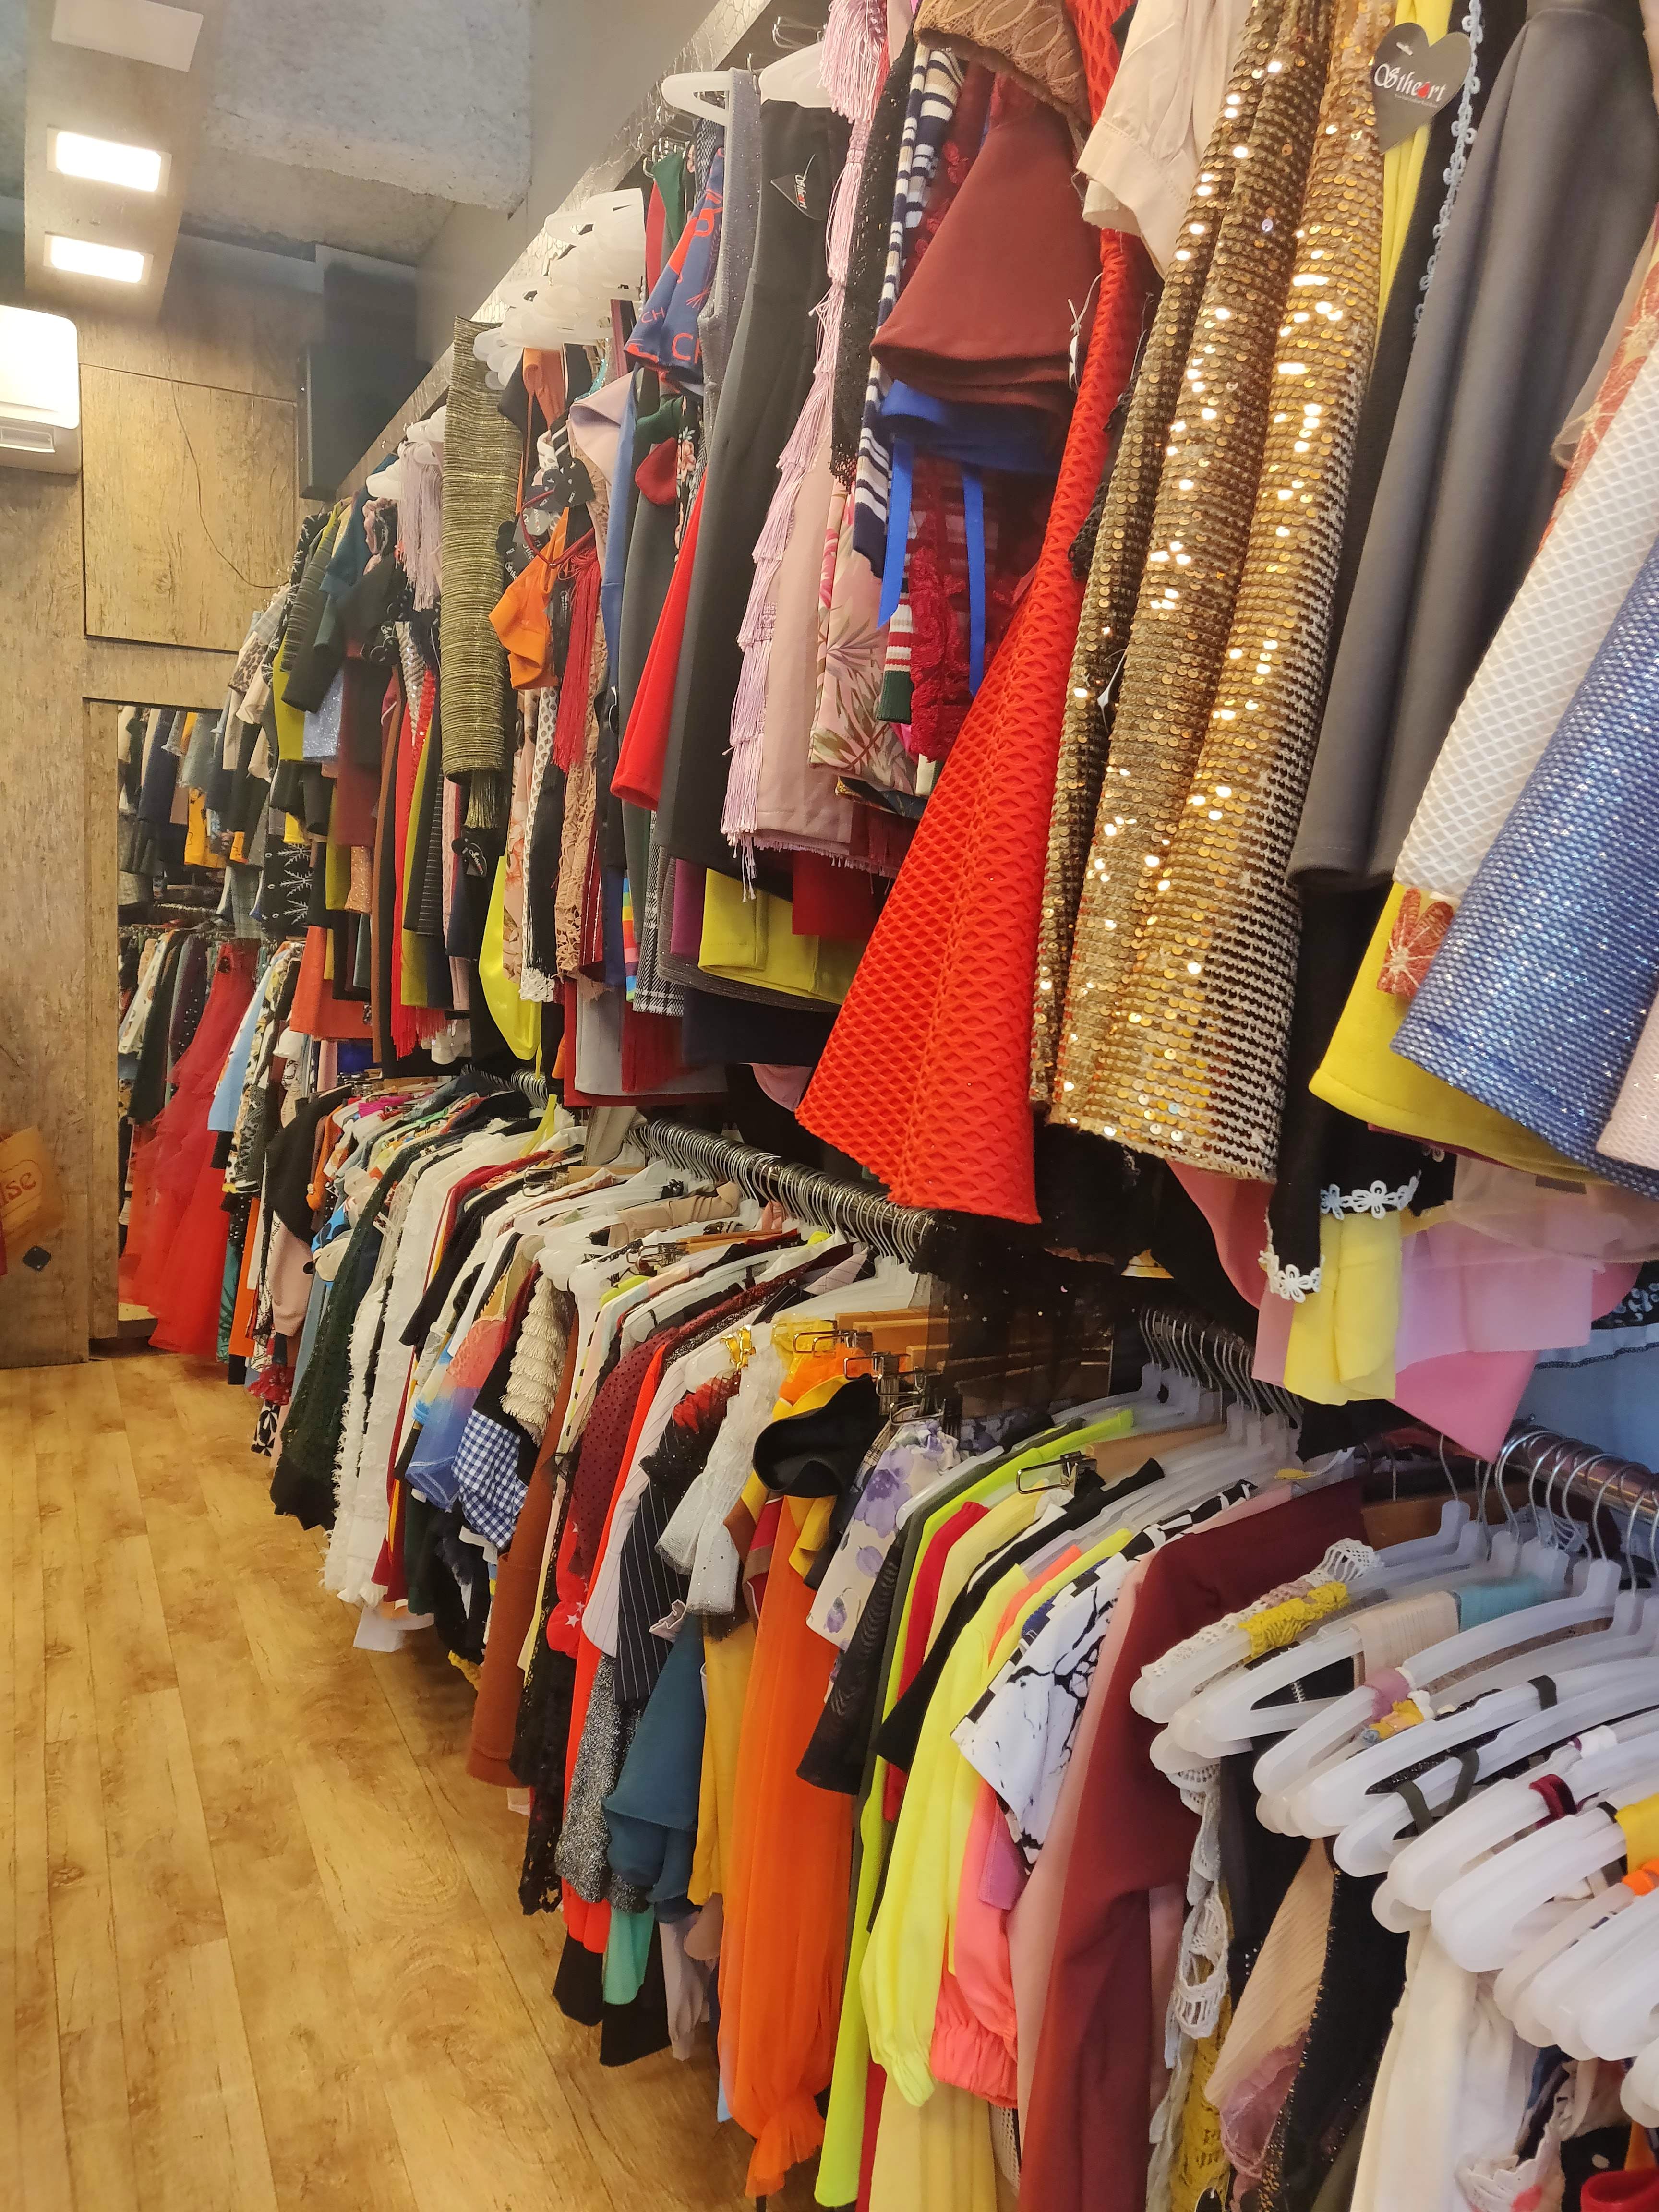 Boutique,Clothing,Room,Outlet store,Closet,Textile,Bazaar,Clothes hanger,Outerwear,Retail